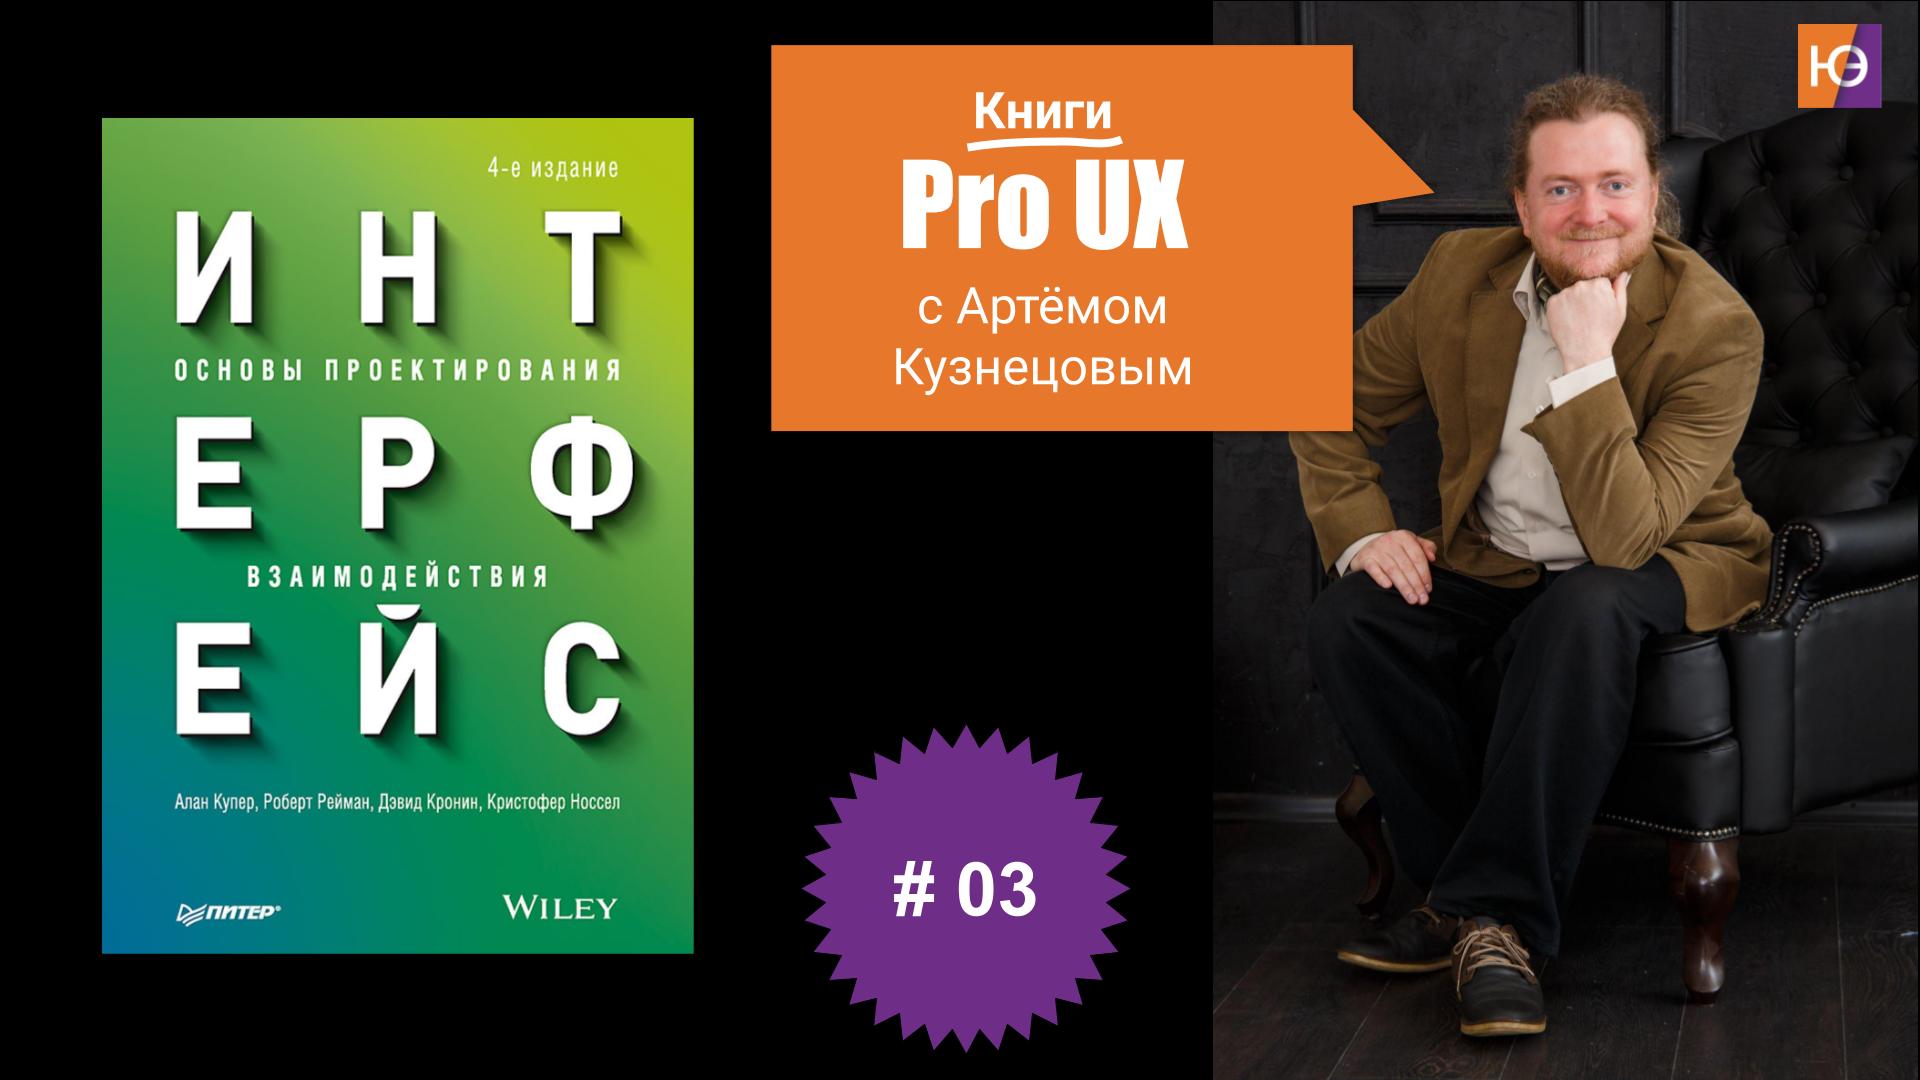 Книги Pro UX c Артёмом Кузнецовым #3 – Алан Купер “Об интерфейсе”